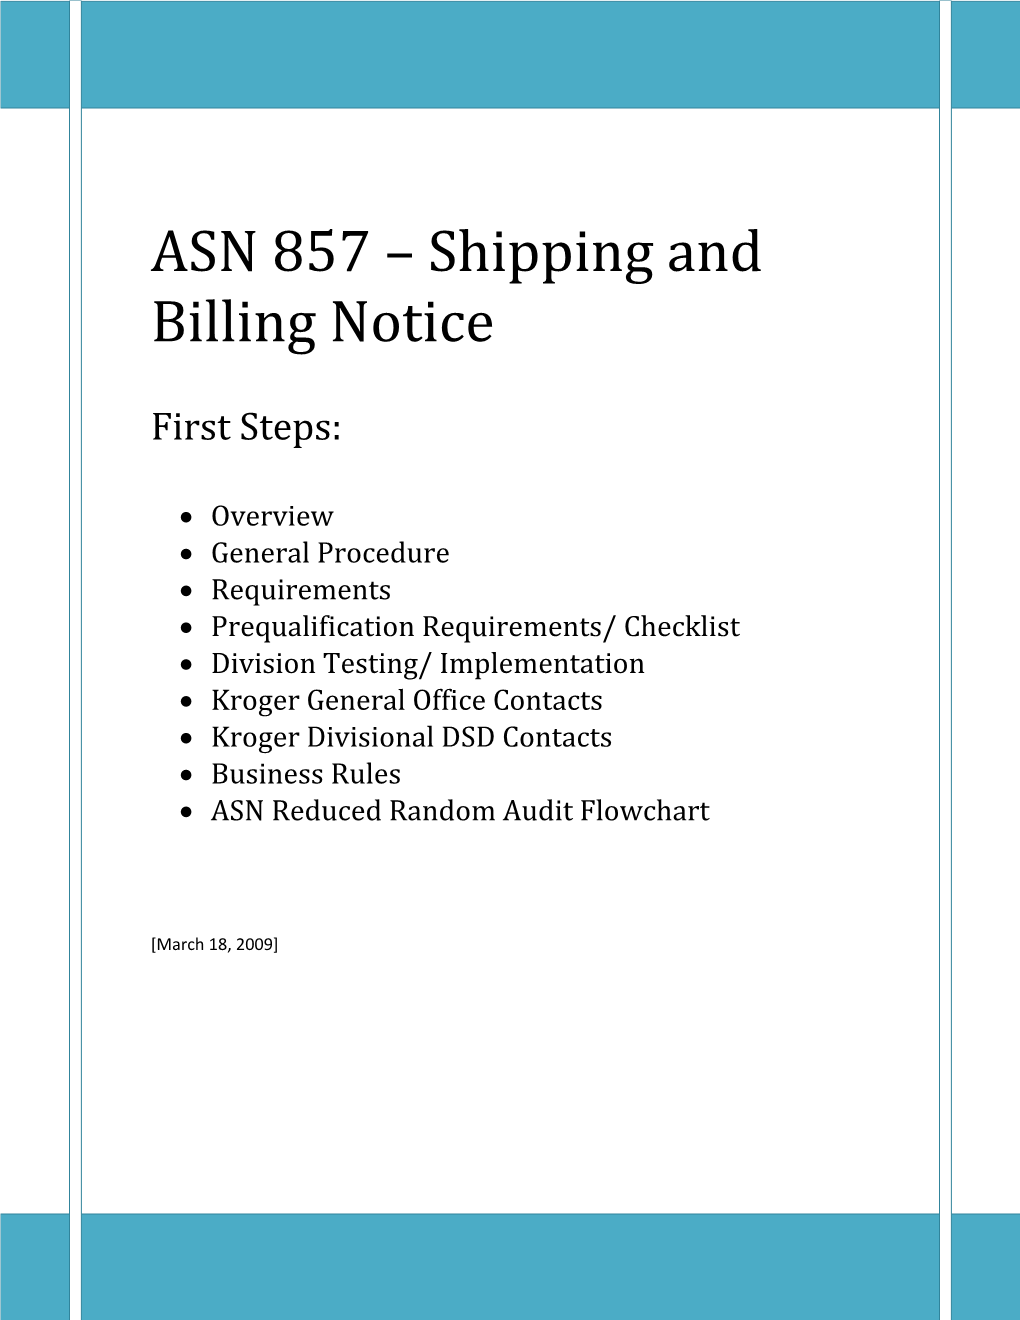 ASN 857 Shipment and Billing Notice